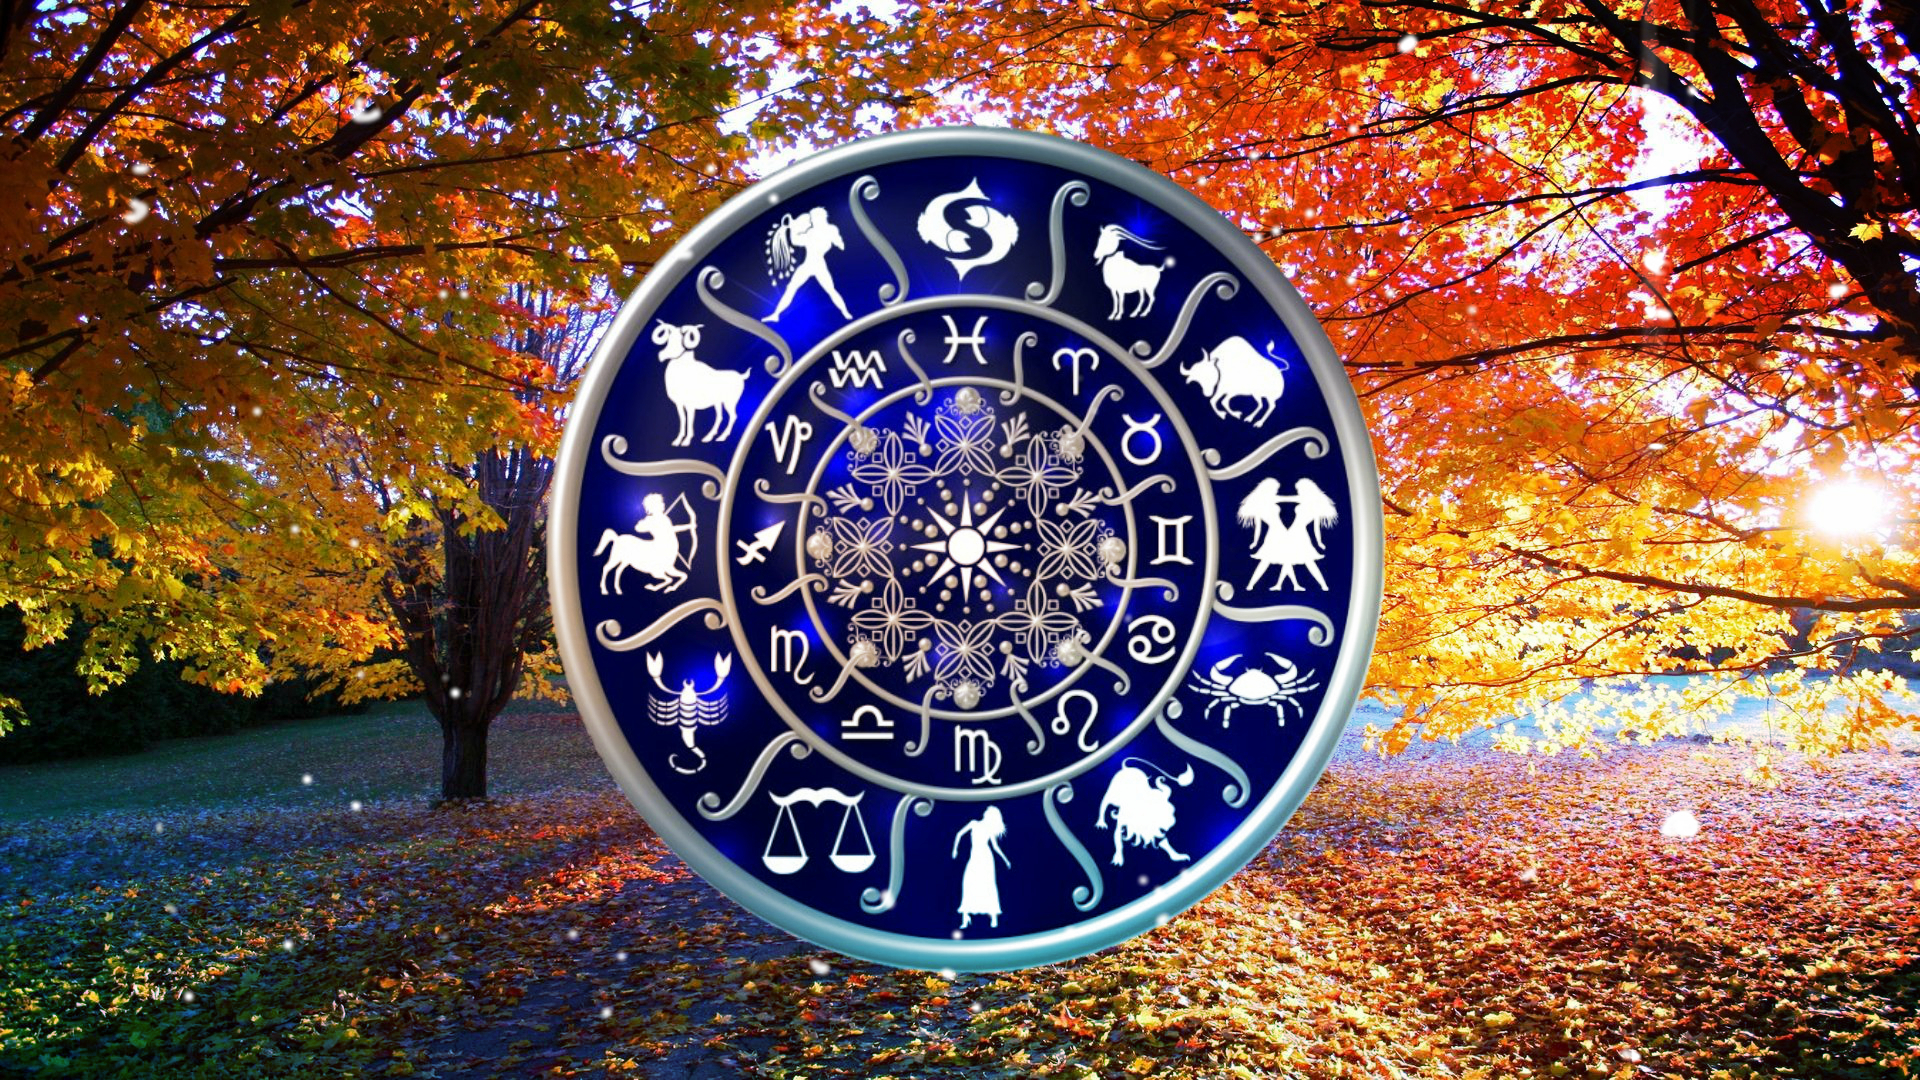 Кто родился в октябре знак. Октябрь гороскоп. Октябрь октября знак зодиака. Астропрогноз на октябрь. Осенние знаки зодиака.